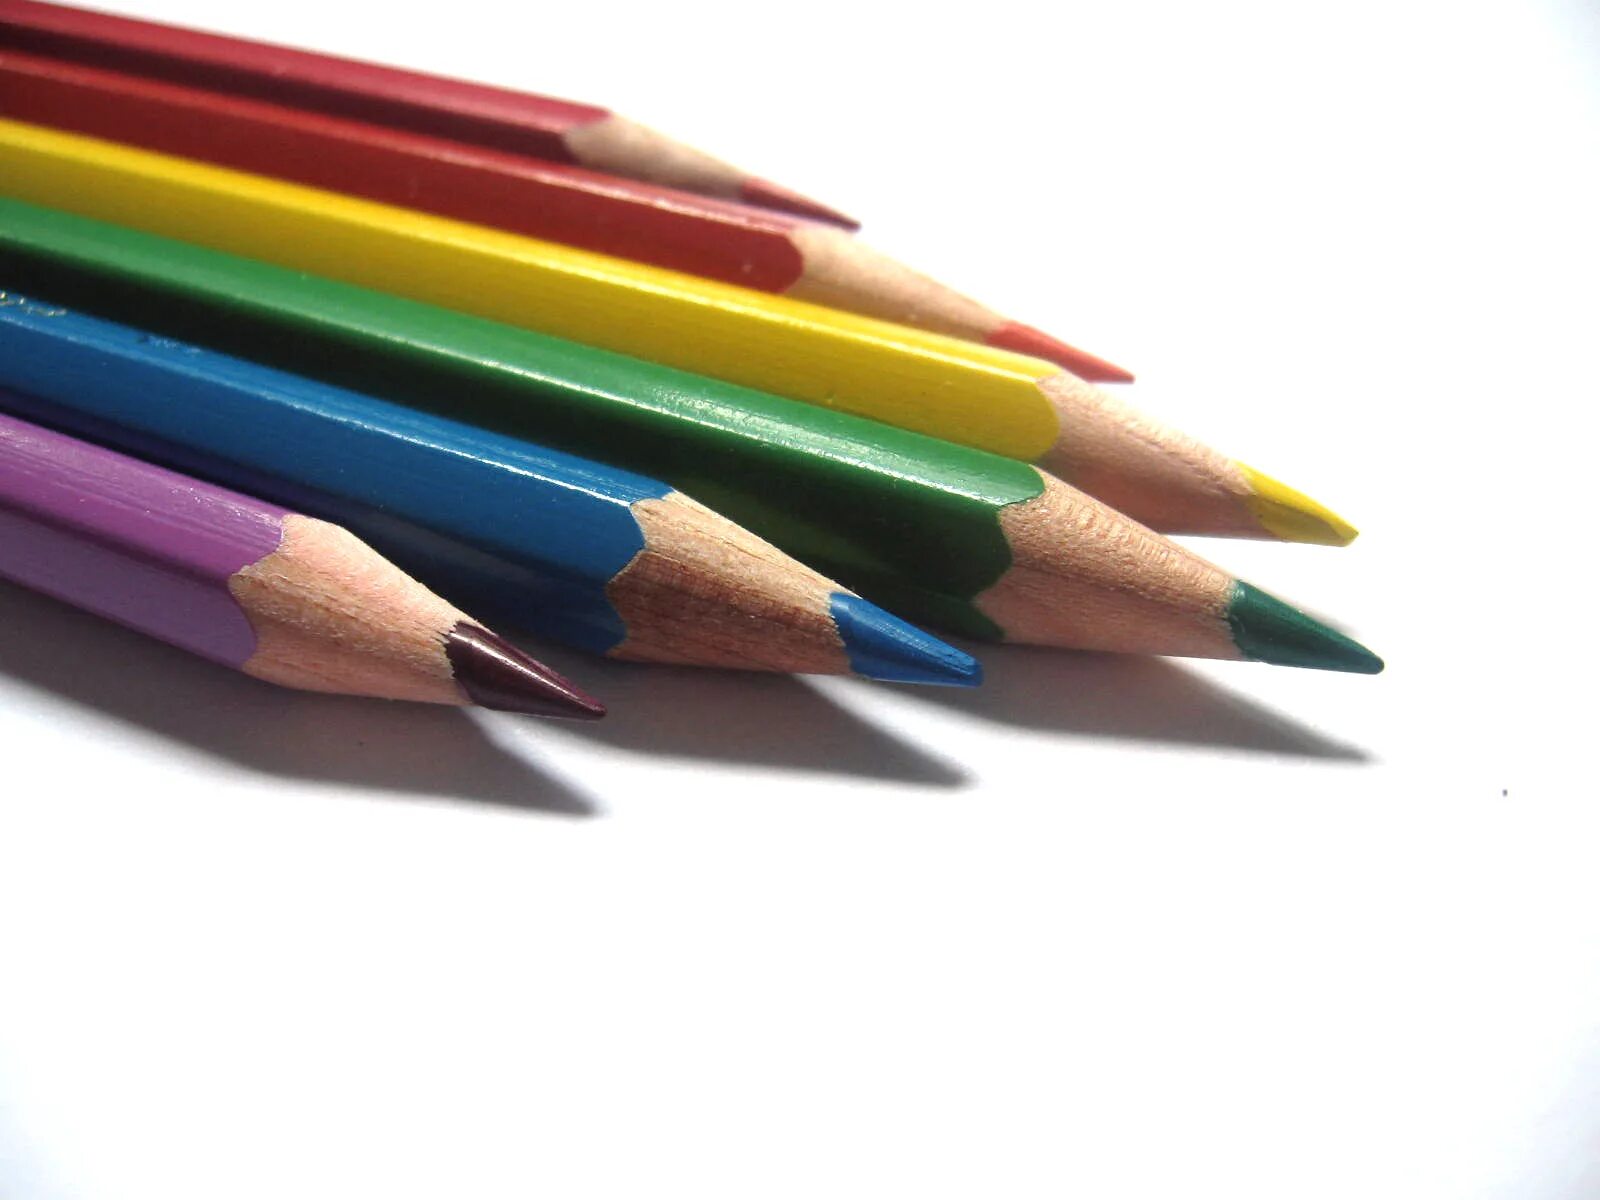 Ten pencils. Карандаши цветные. Цветные карандаши на белом фоне. Маленький карандаш. Цветные карандаши на прозрачном фоне.